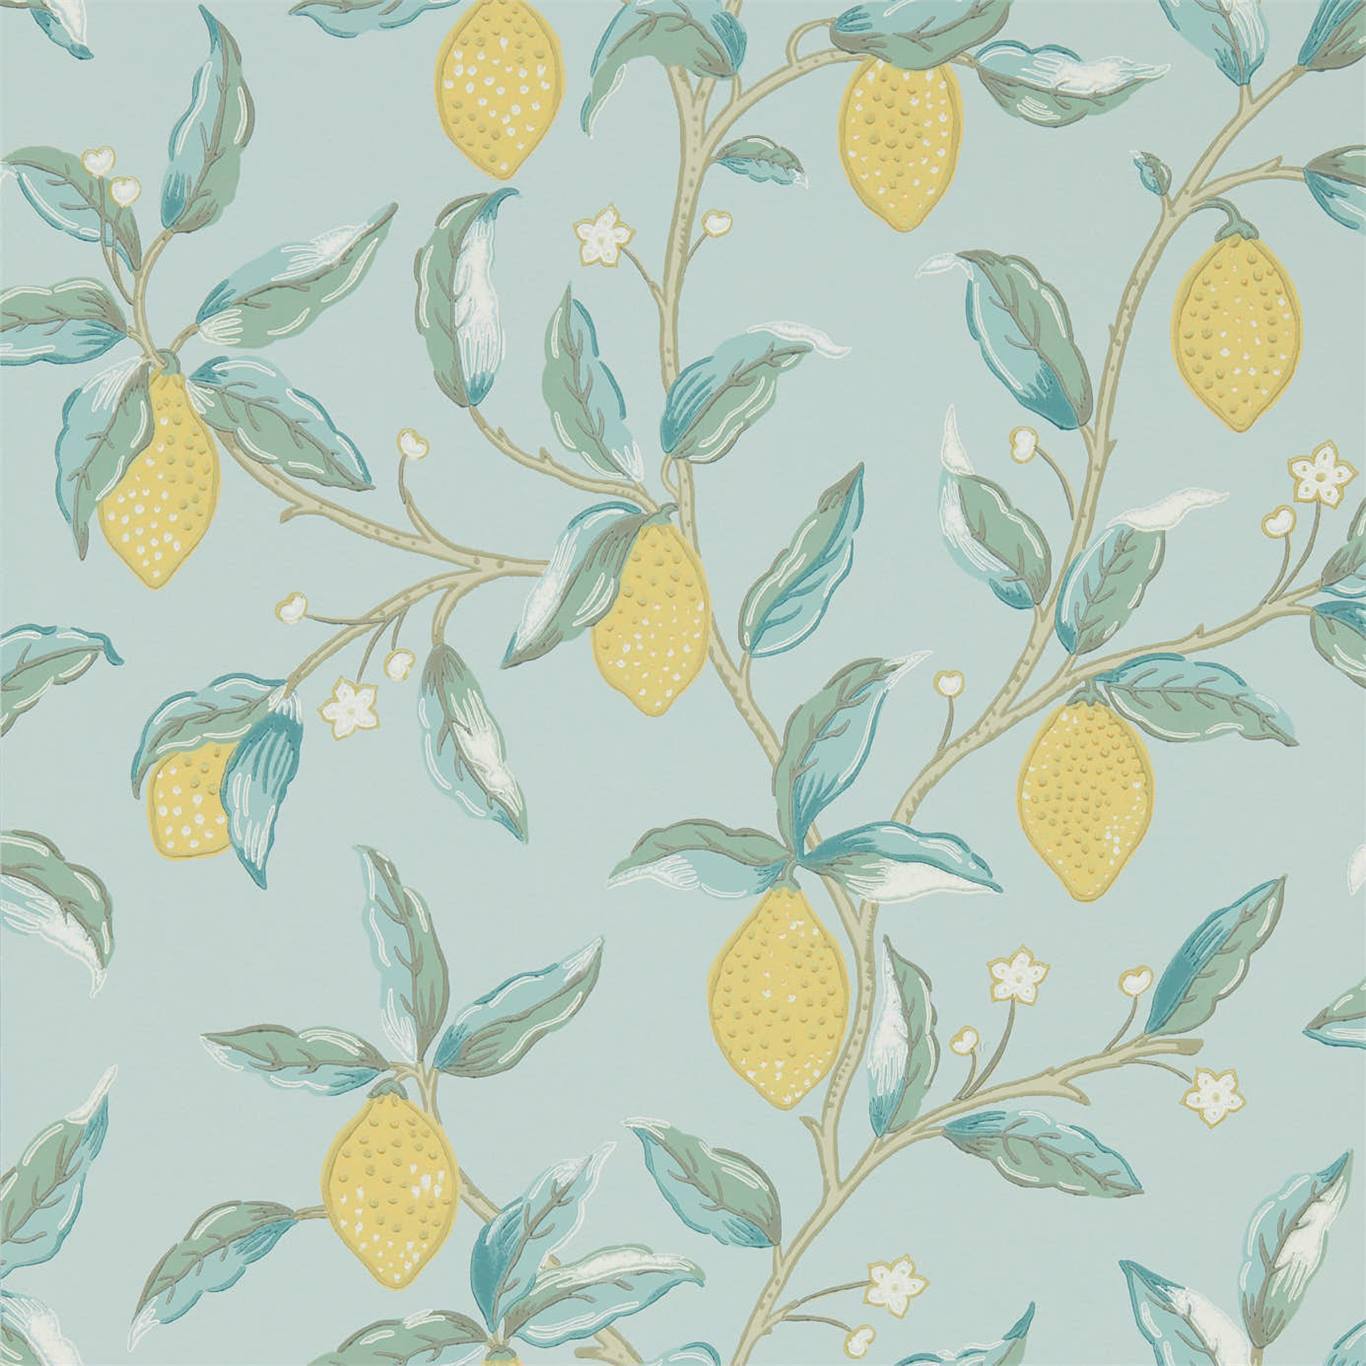 Lemon Tree Wallpaper by Morris & Co